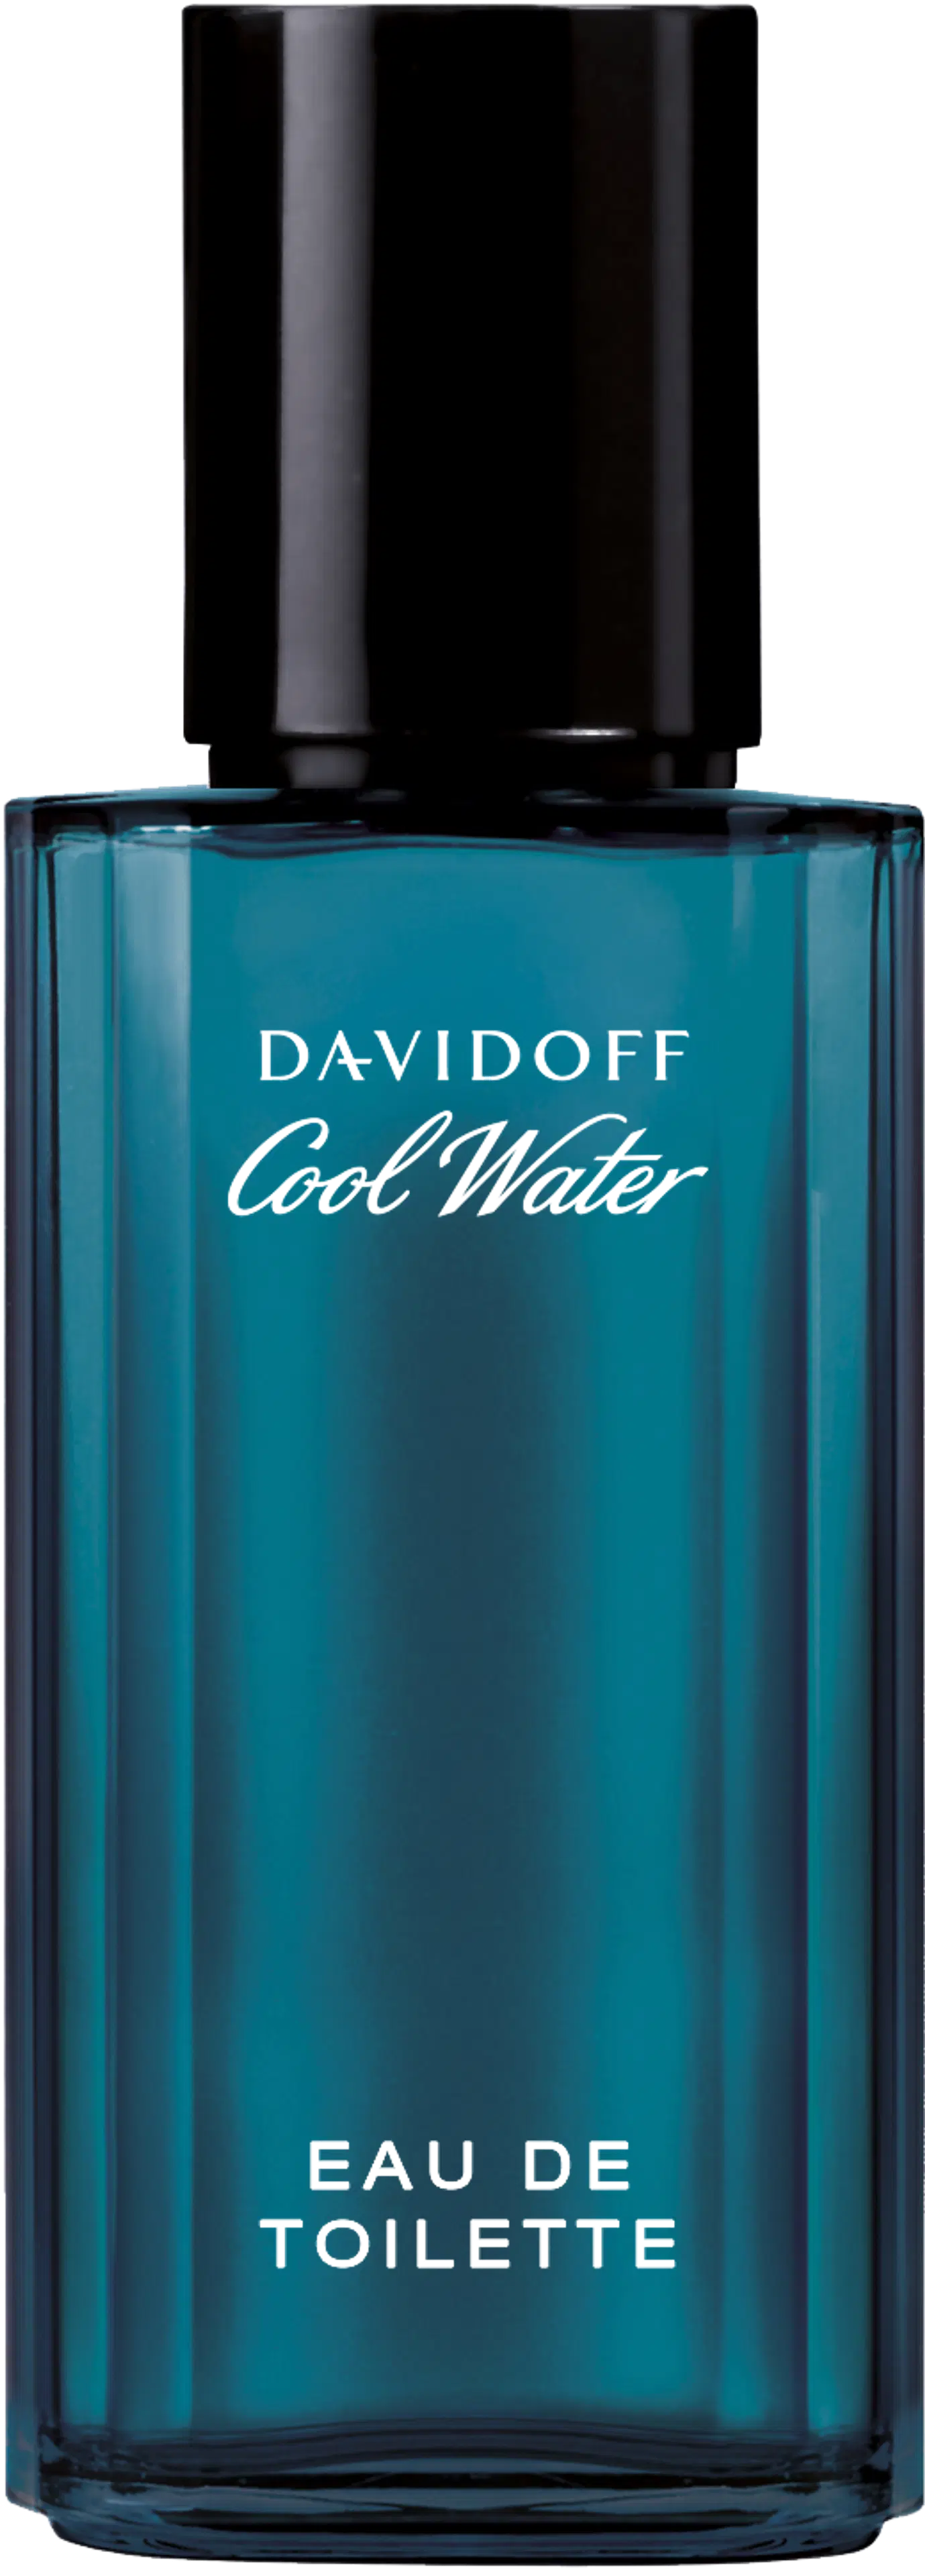 Davidoff Cool Water EdT tuoksu 40 ml